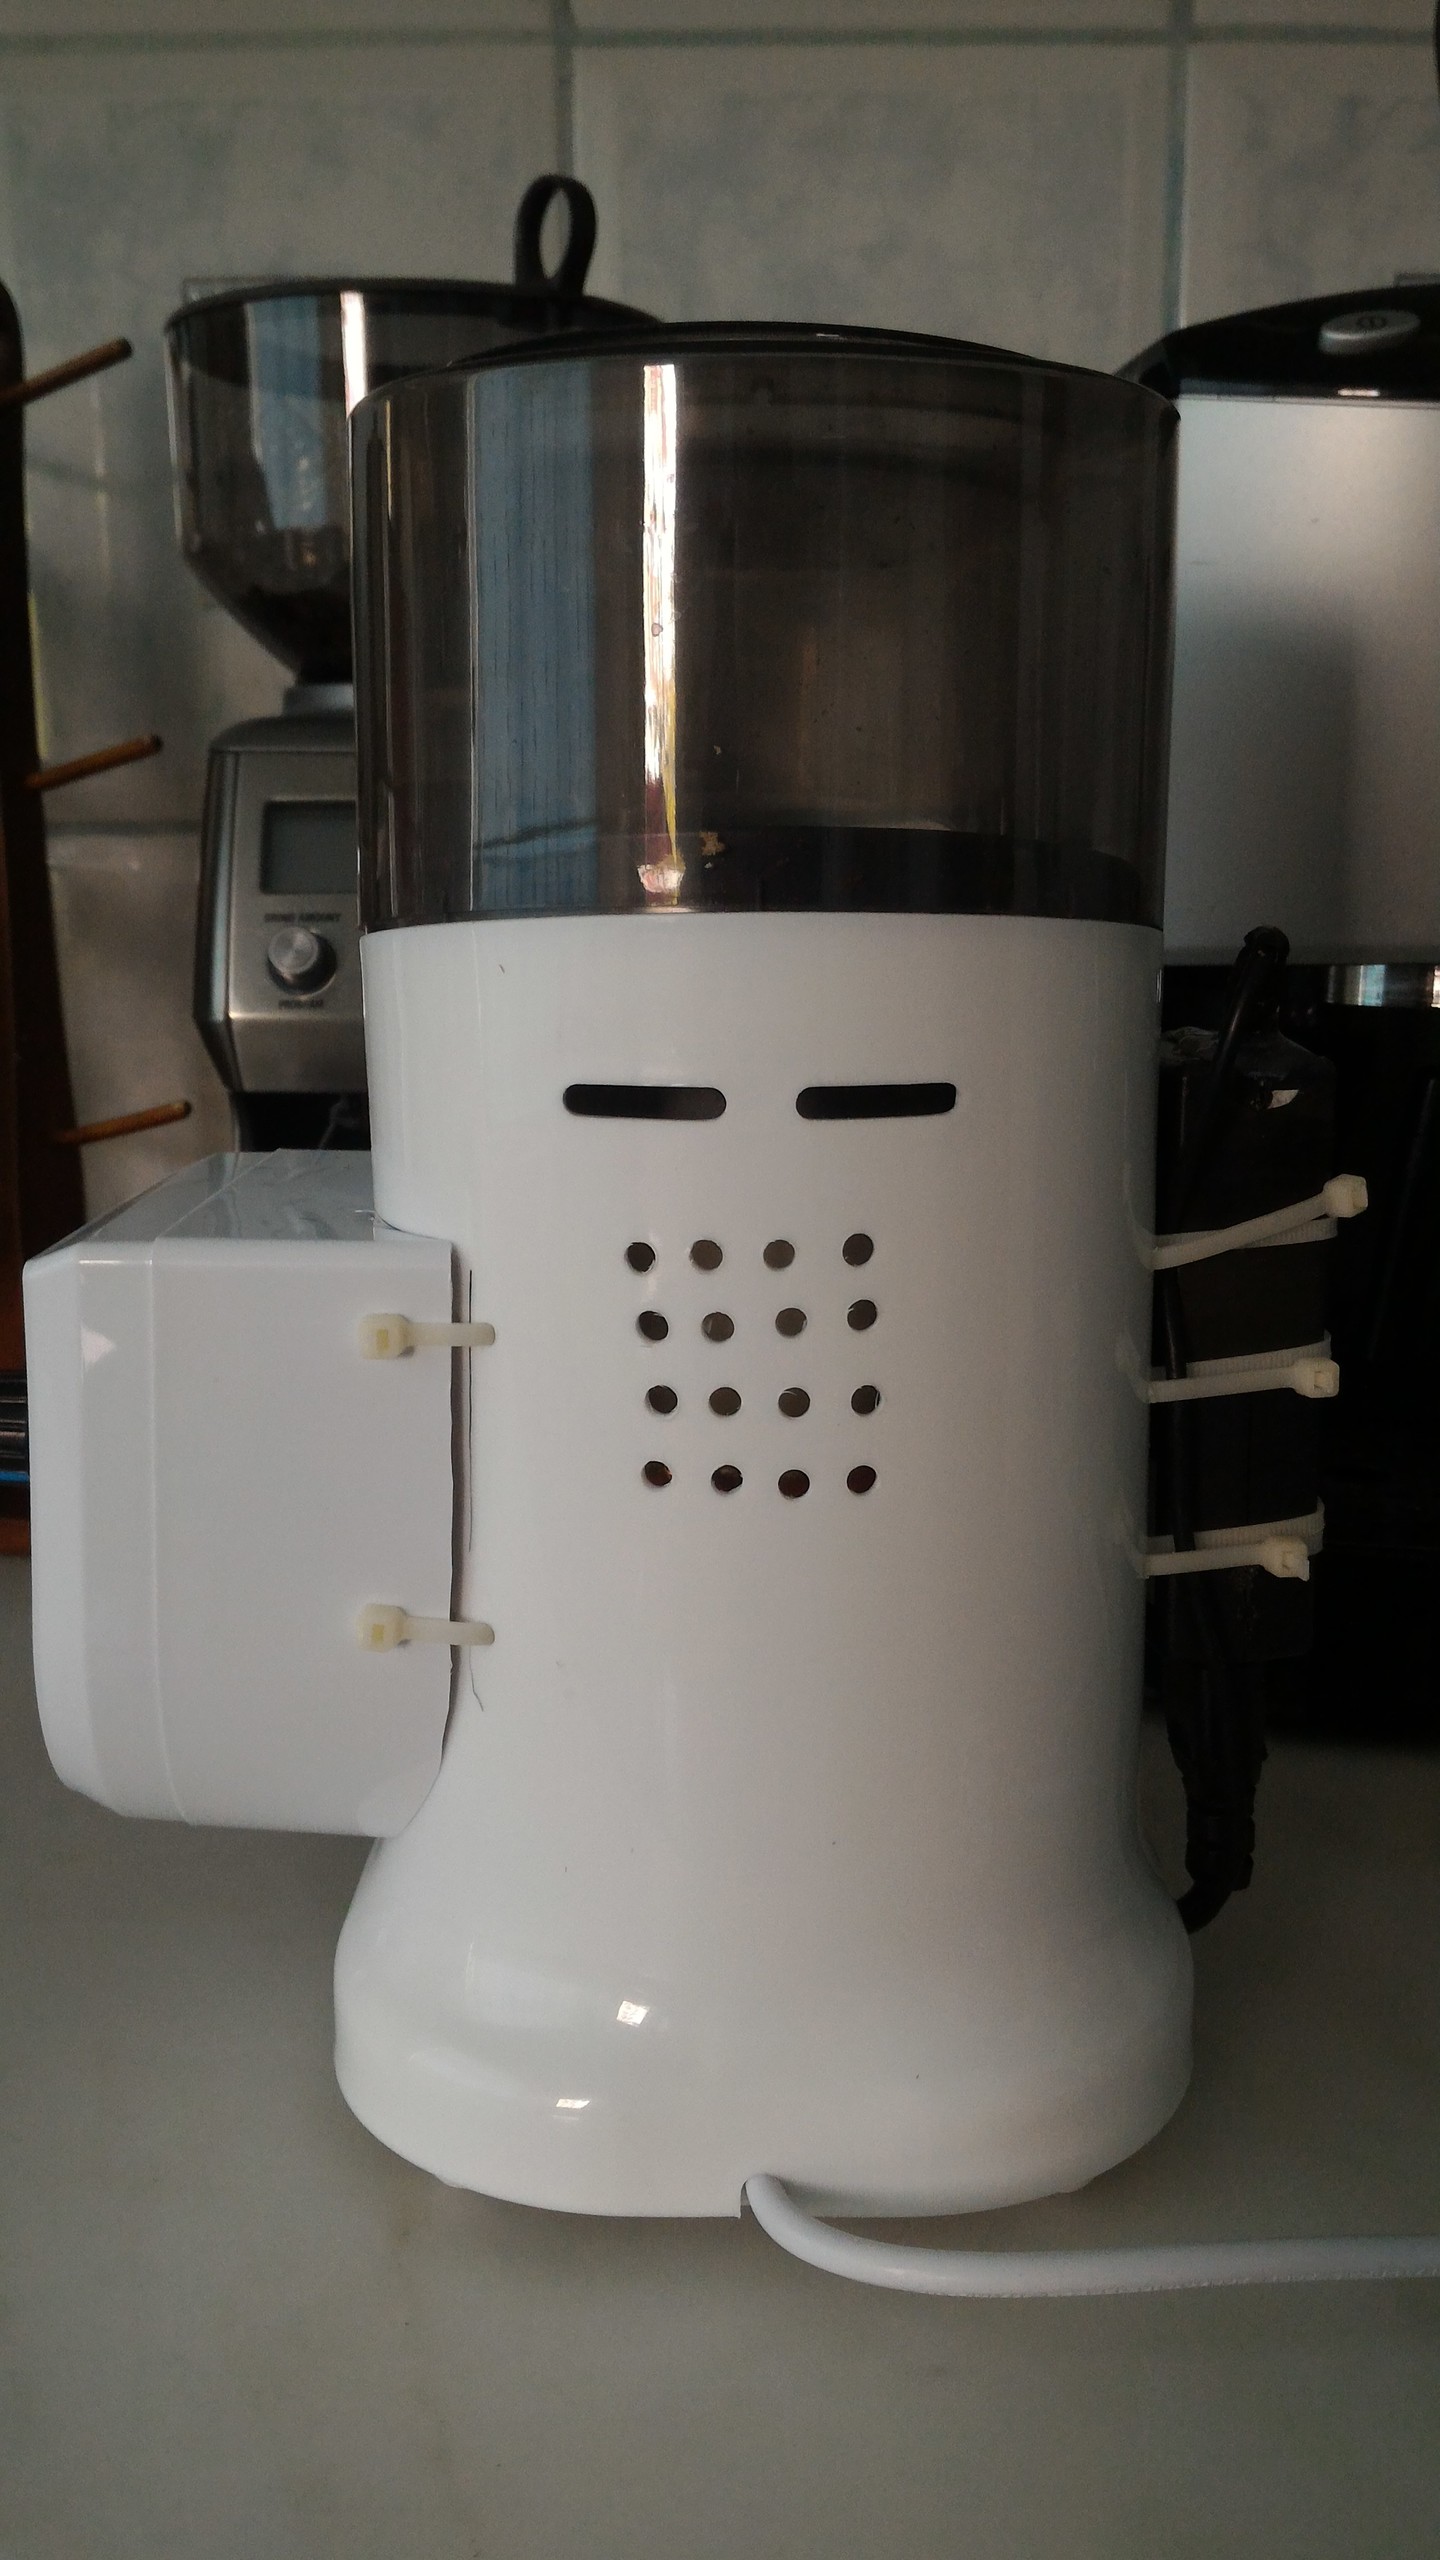  Ev yapımı kahve kavurma makinesi